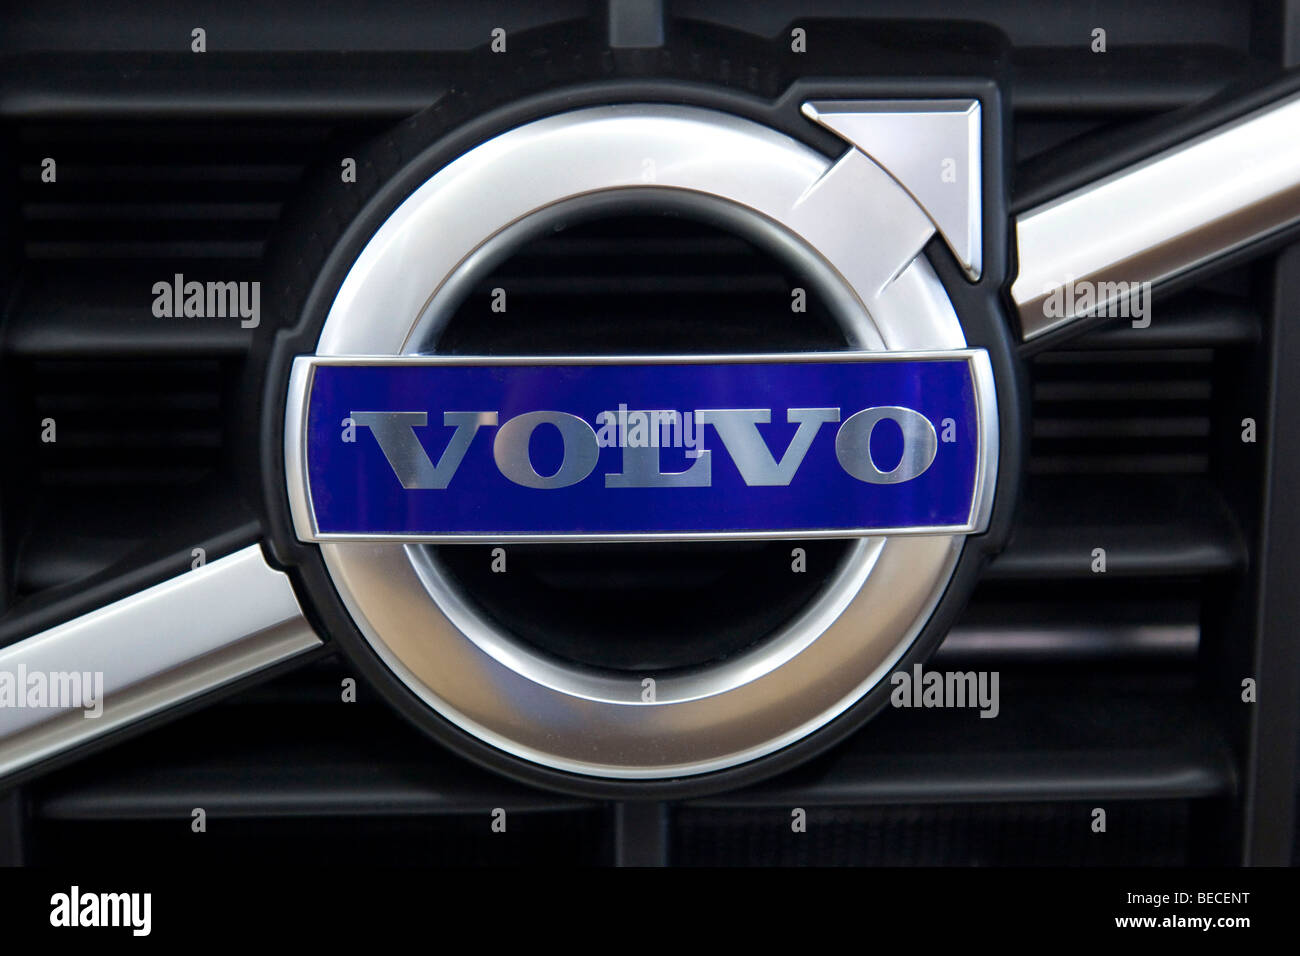 Emblema de Volvo en un coche Foto de stock